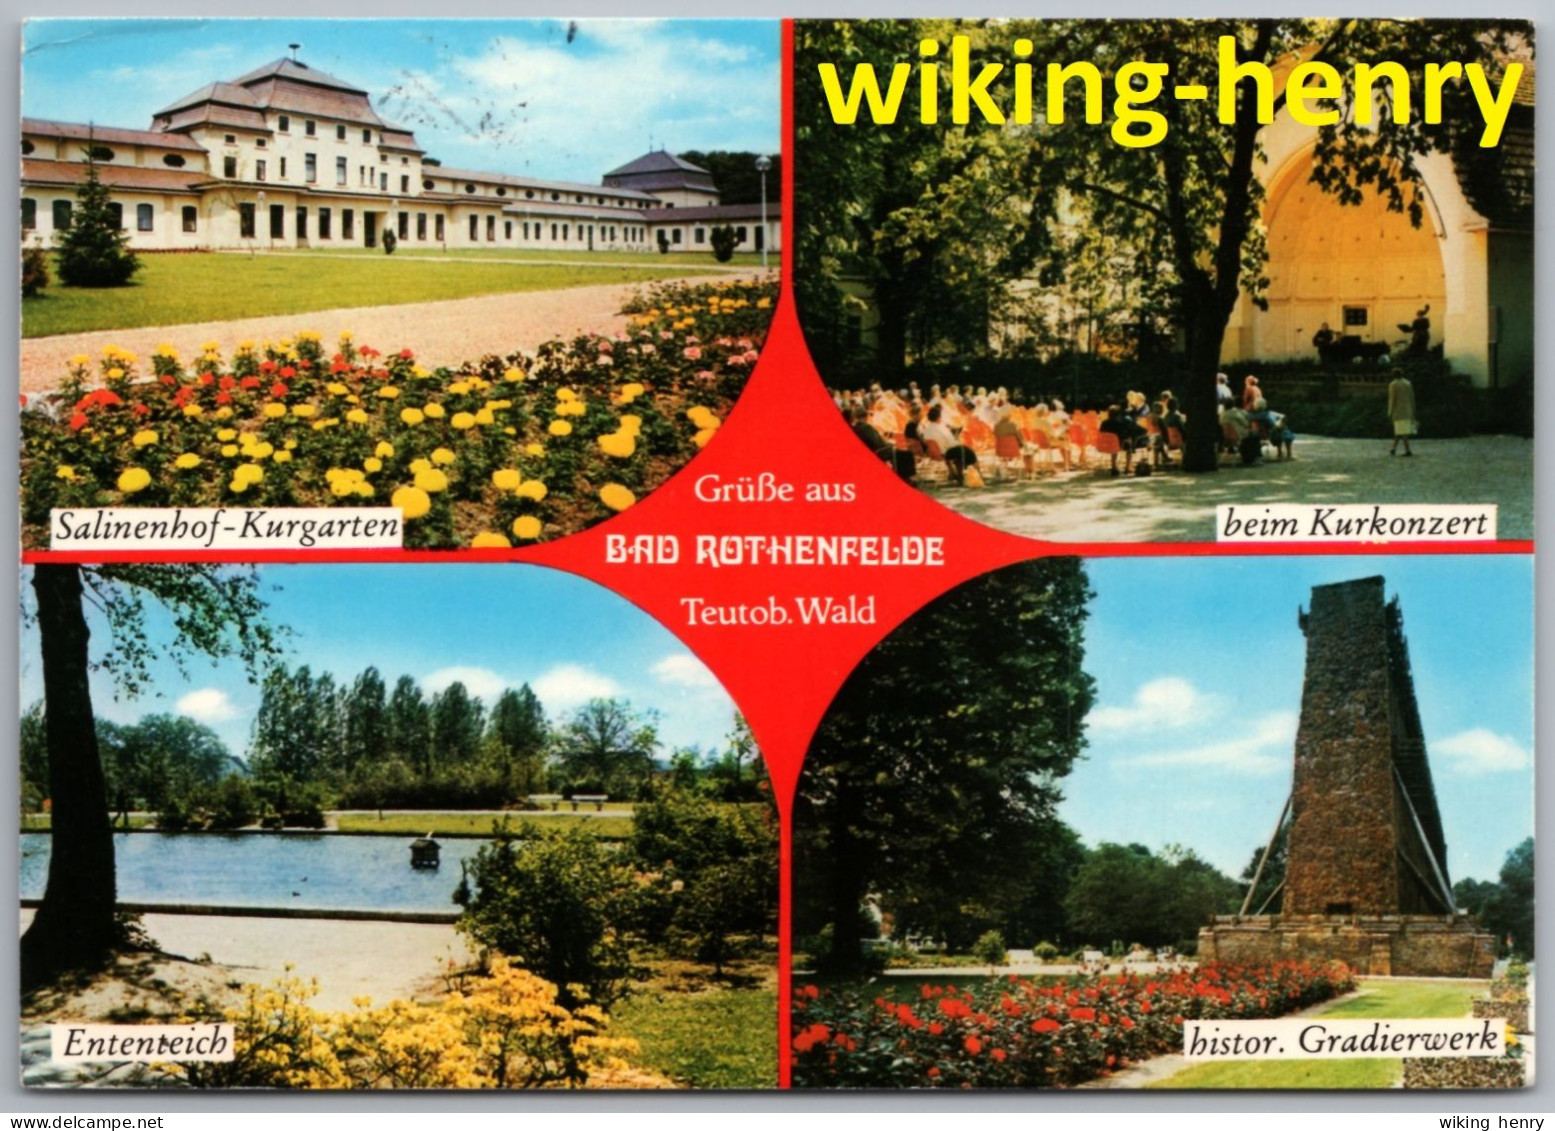 Bad Rothenfelde - Mehrbildkarte - Bad Rothenfelde